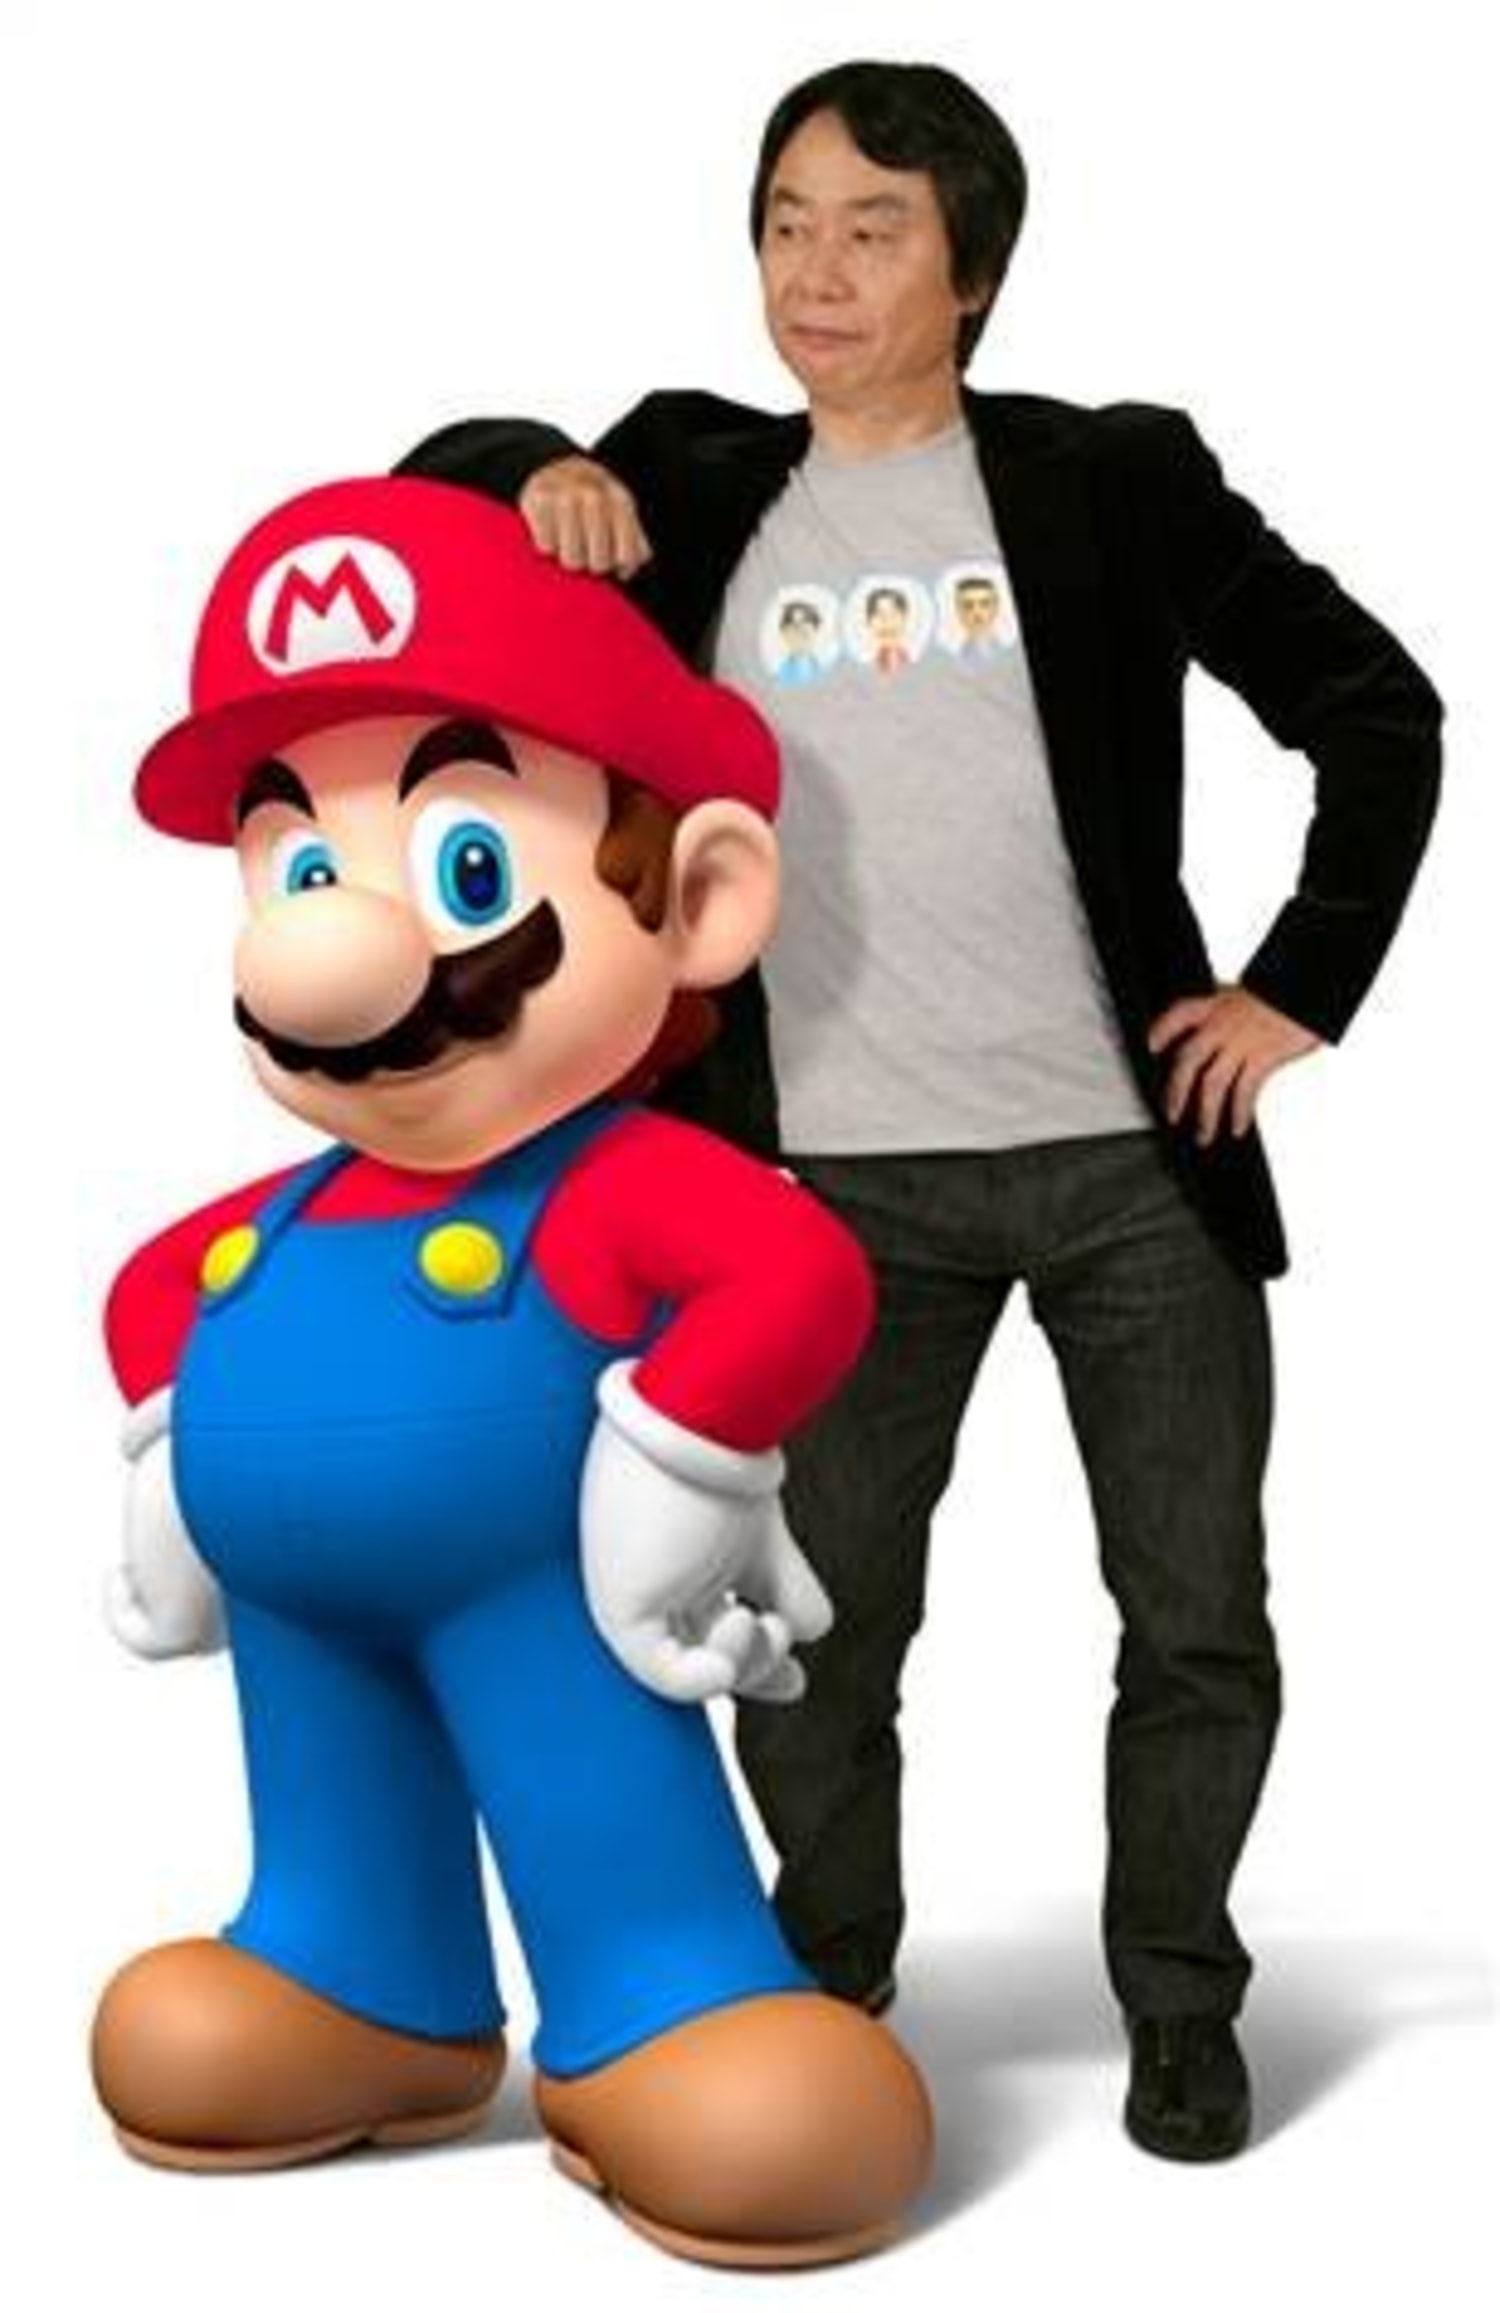 Nintendo's Game Developer Shigeru Miyamoto - Interview 